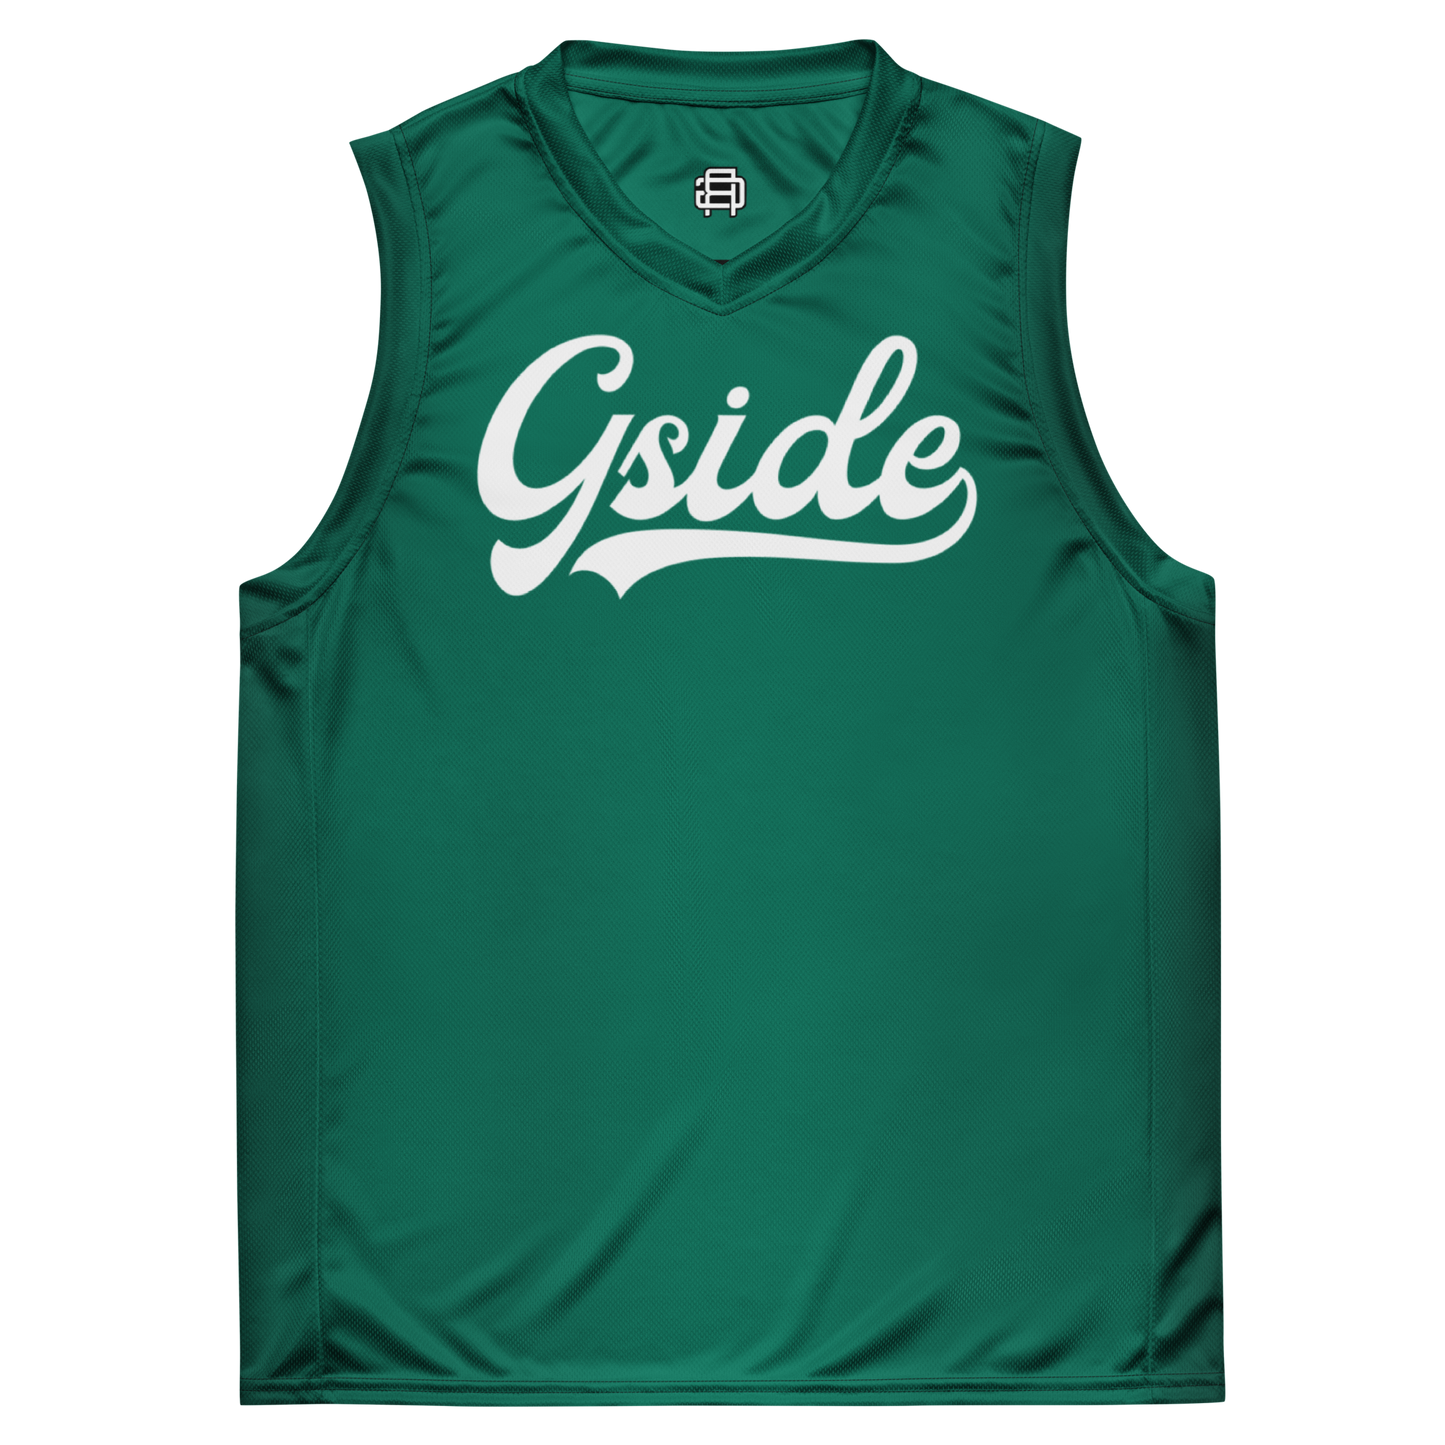 Gside Basketball Jersey - Tropical Green